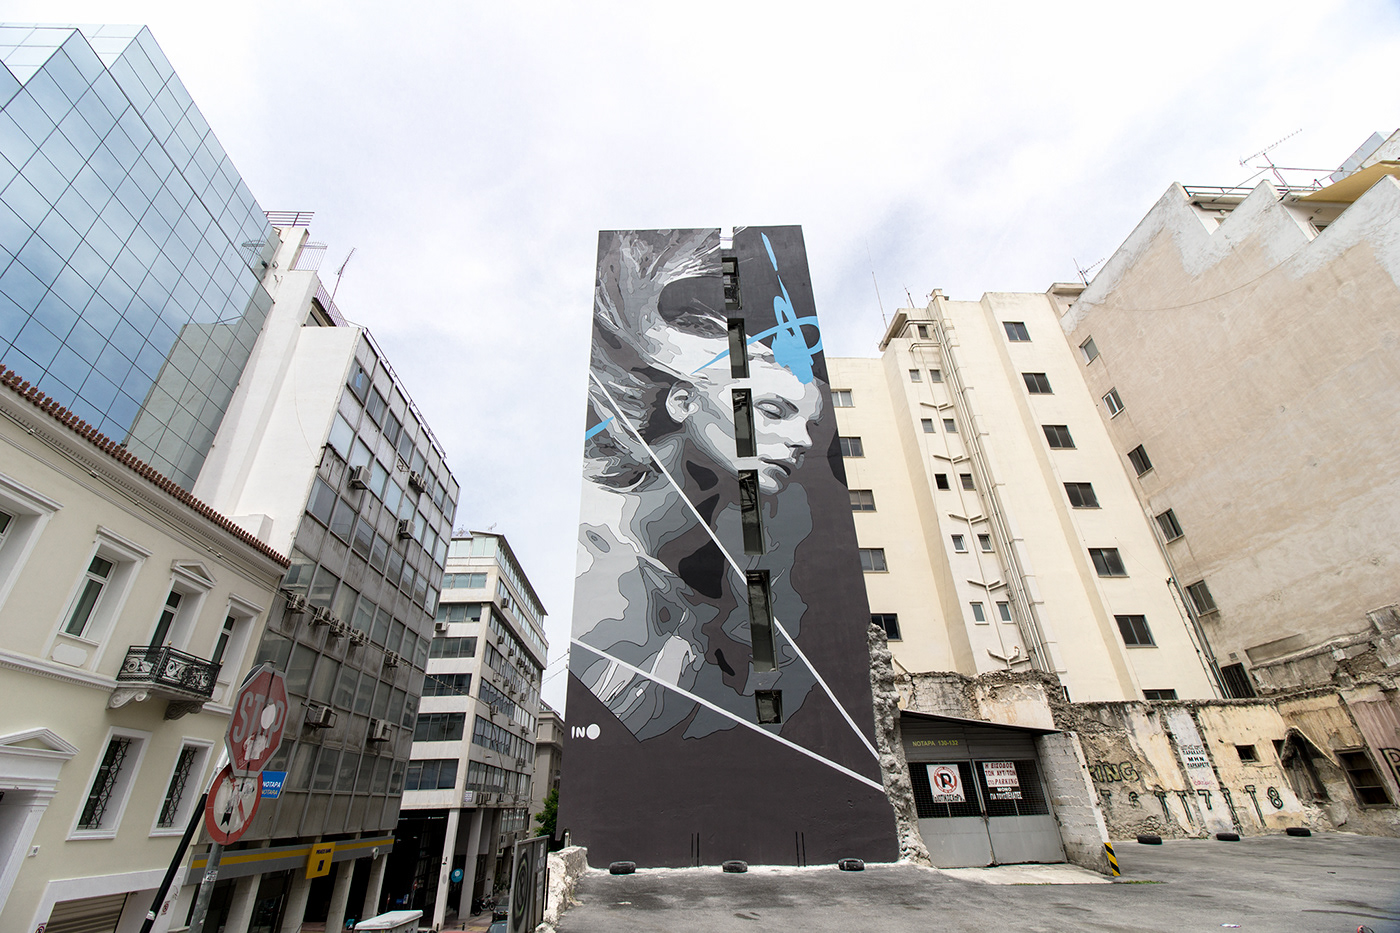 Ino artist contemporary public Urban Street building woman blue cityscape